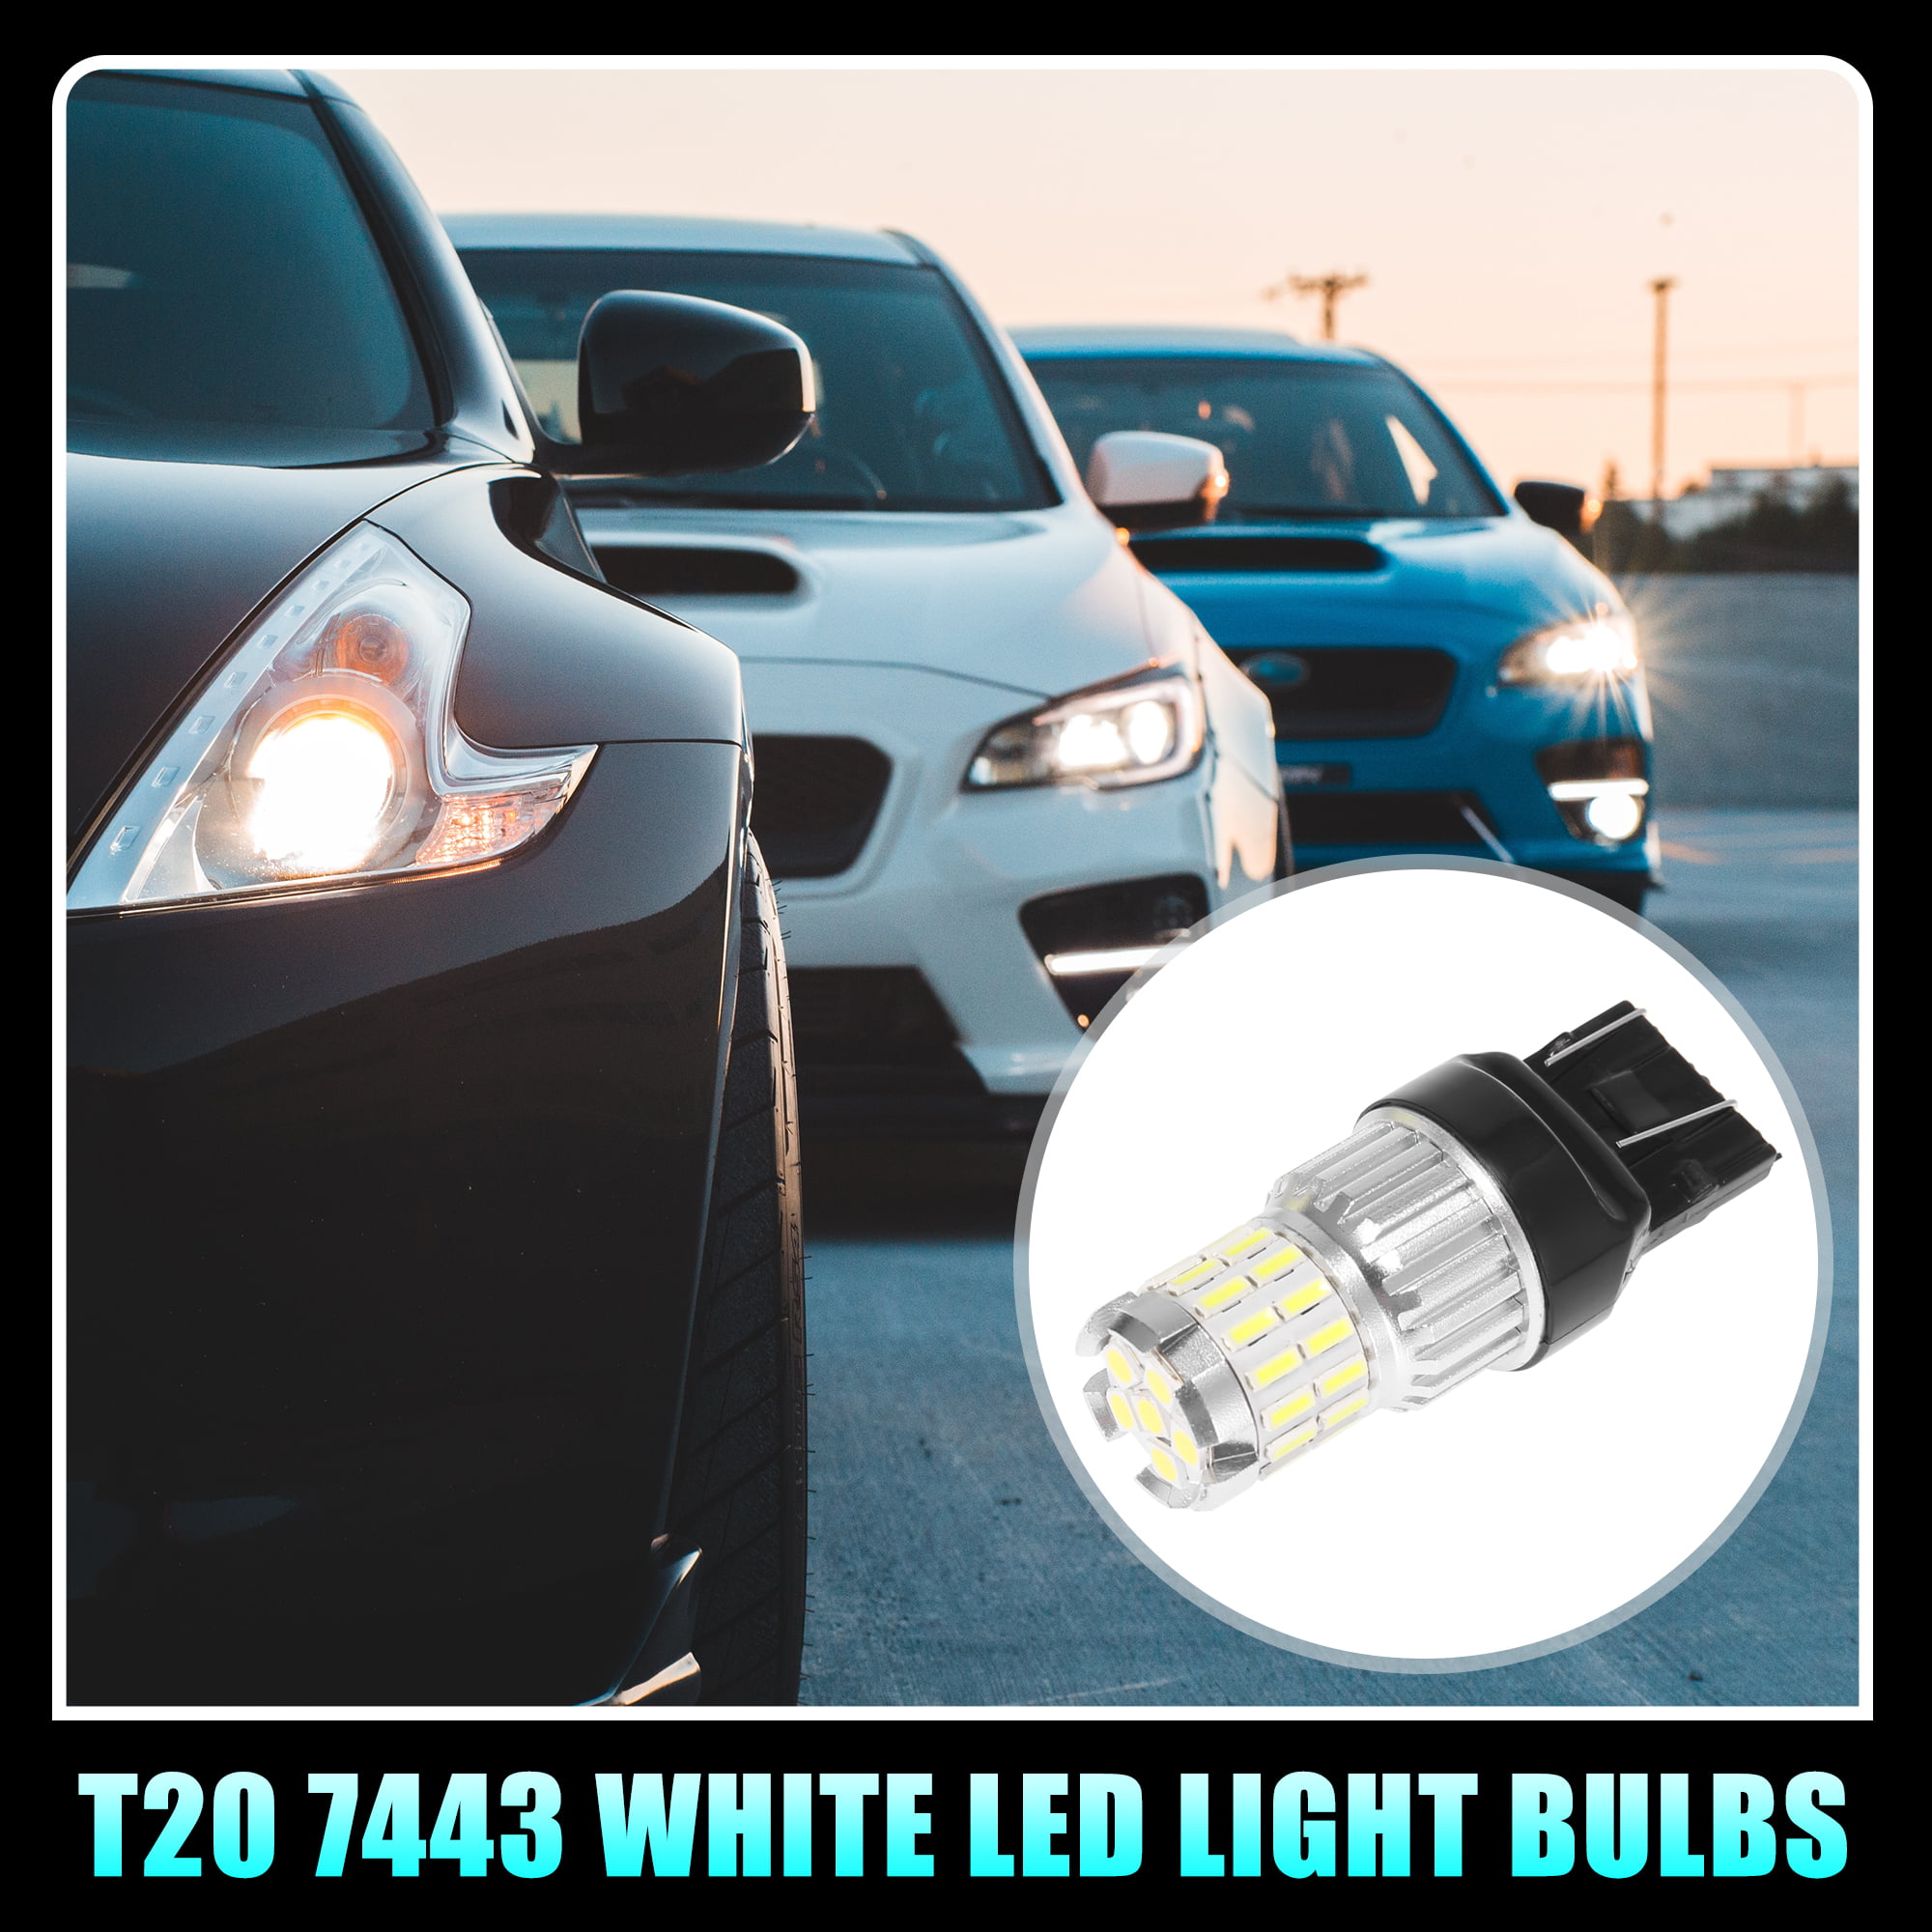 X AUTOHAUX 2 Pcs T20 7443 White LED Light Bulbs Replacement Universal for Turn Signal Light